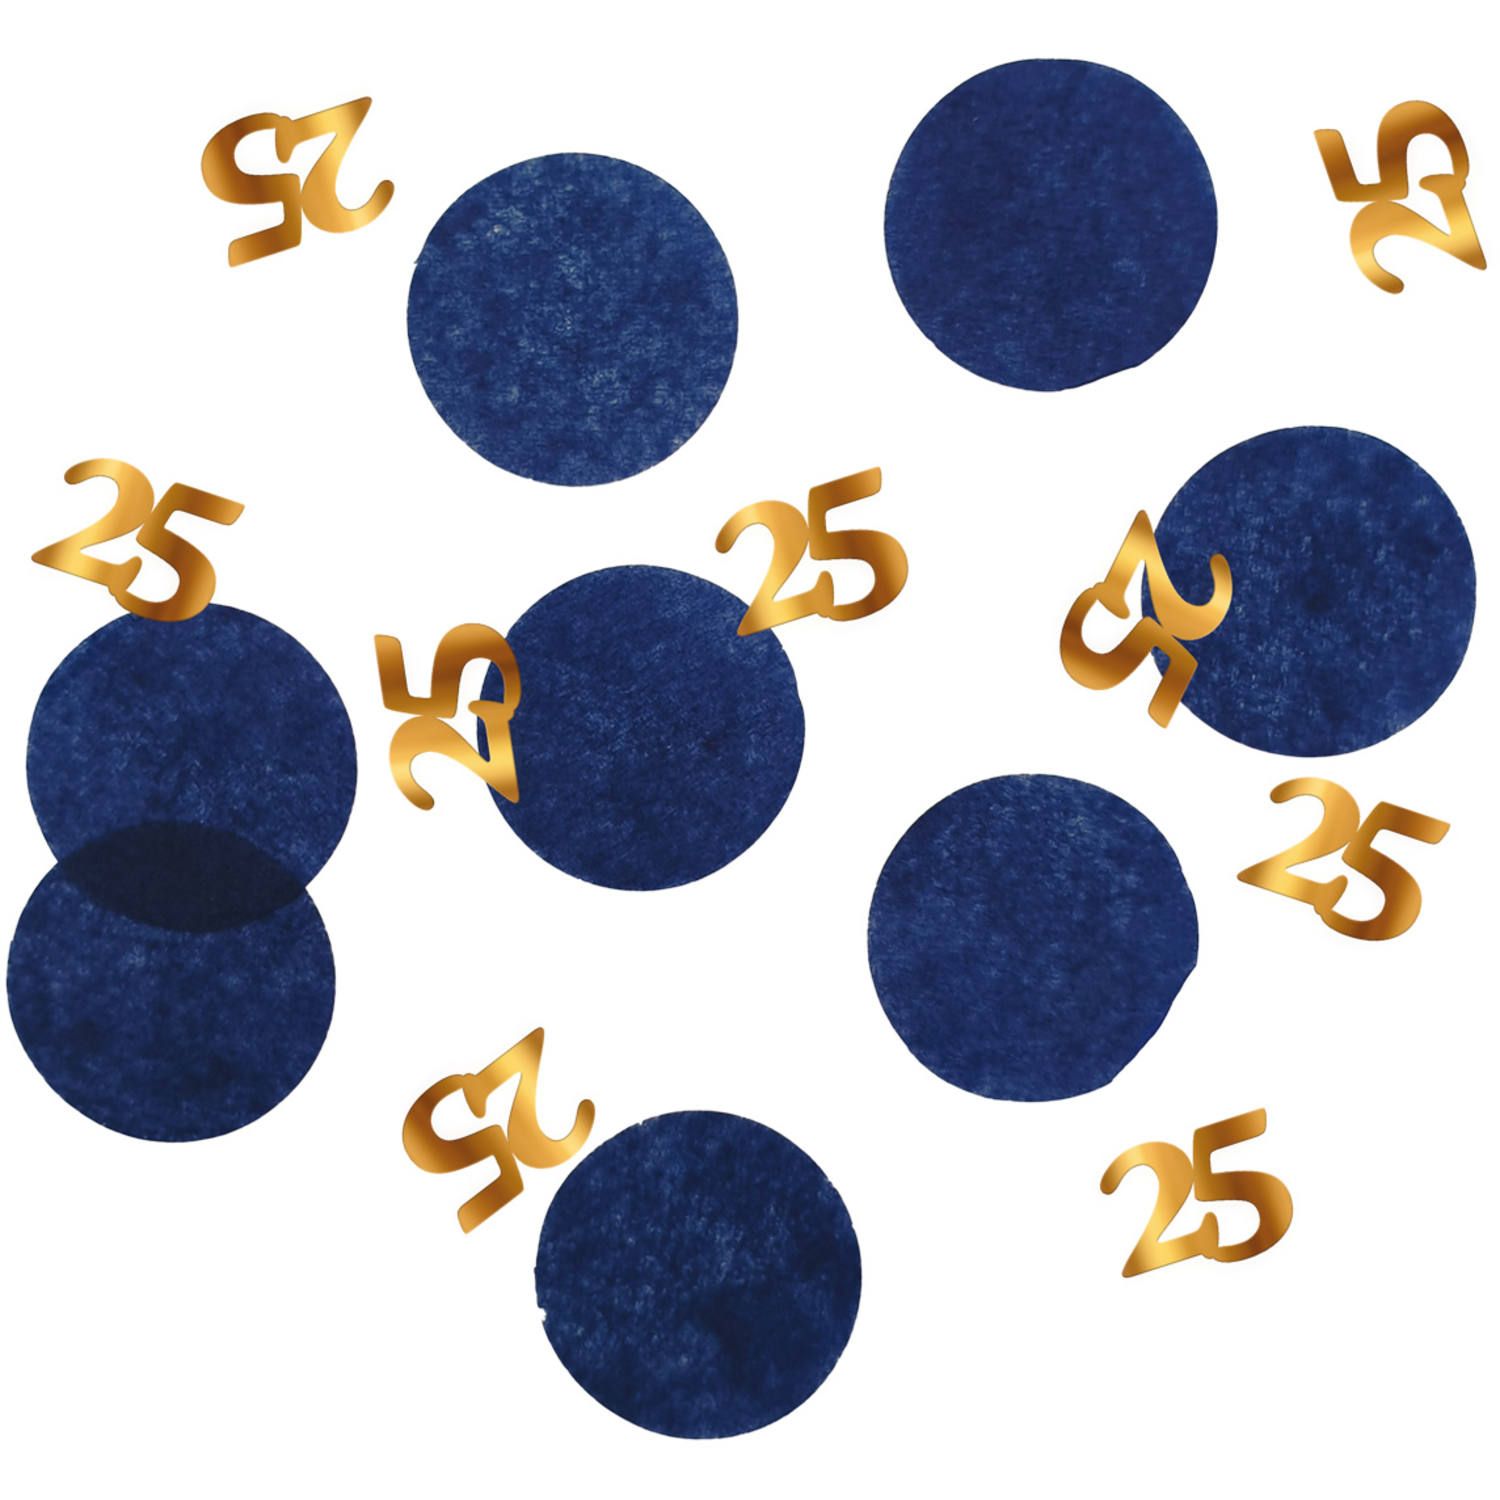 Feest confetti elegant true blue 25 jaar